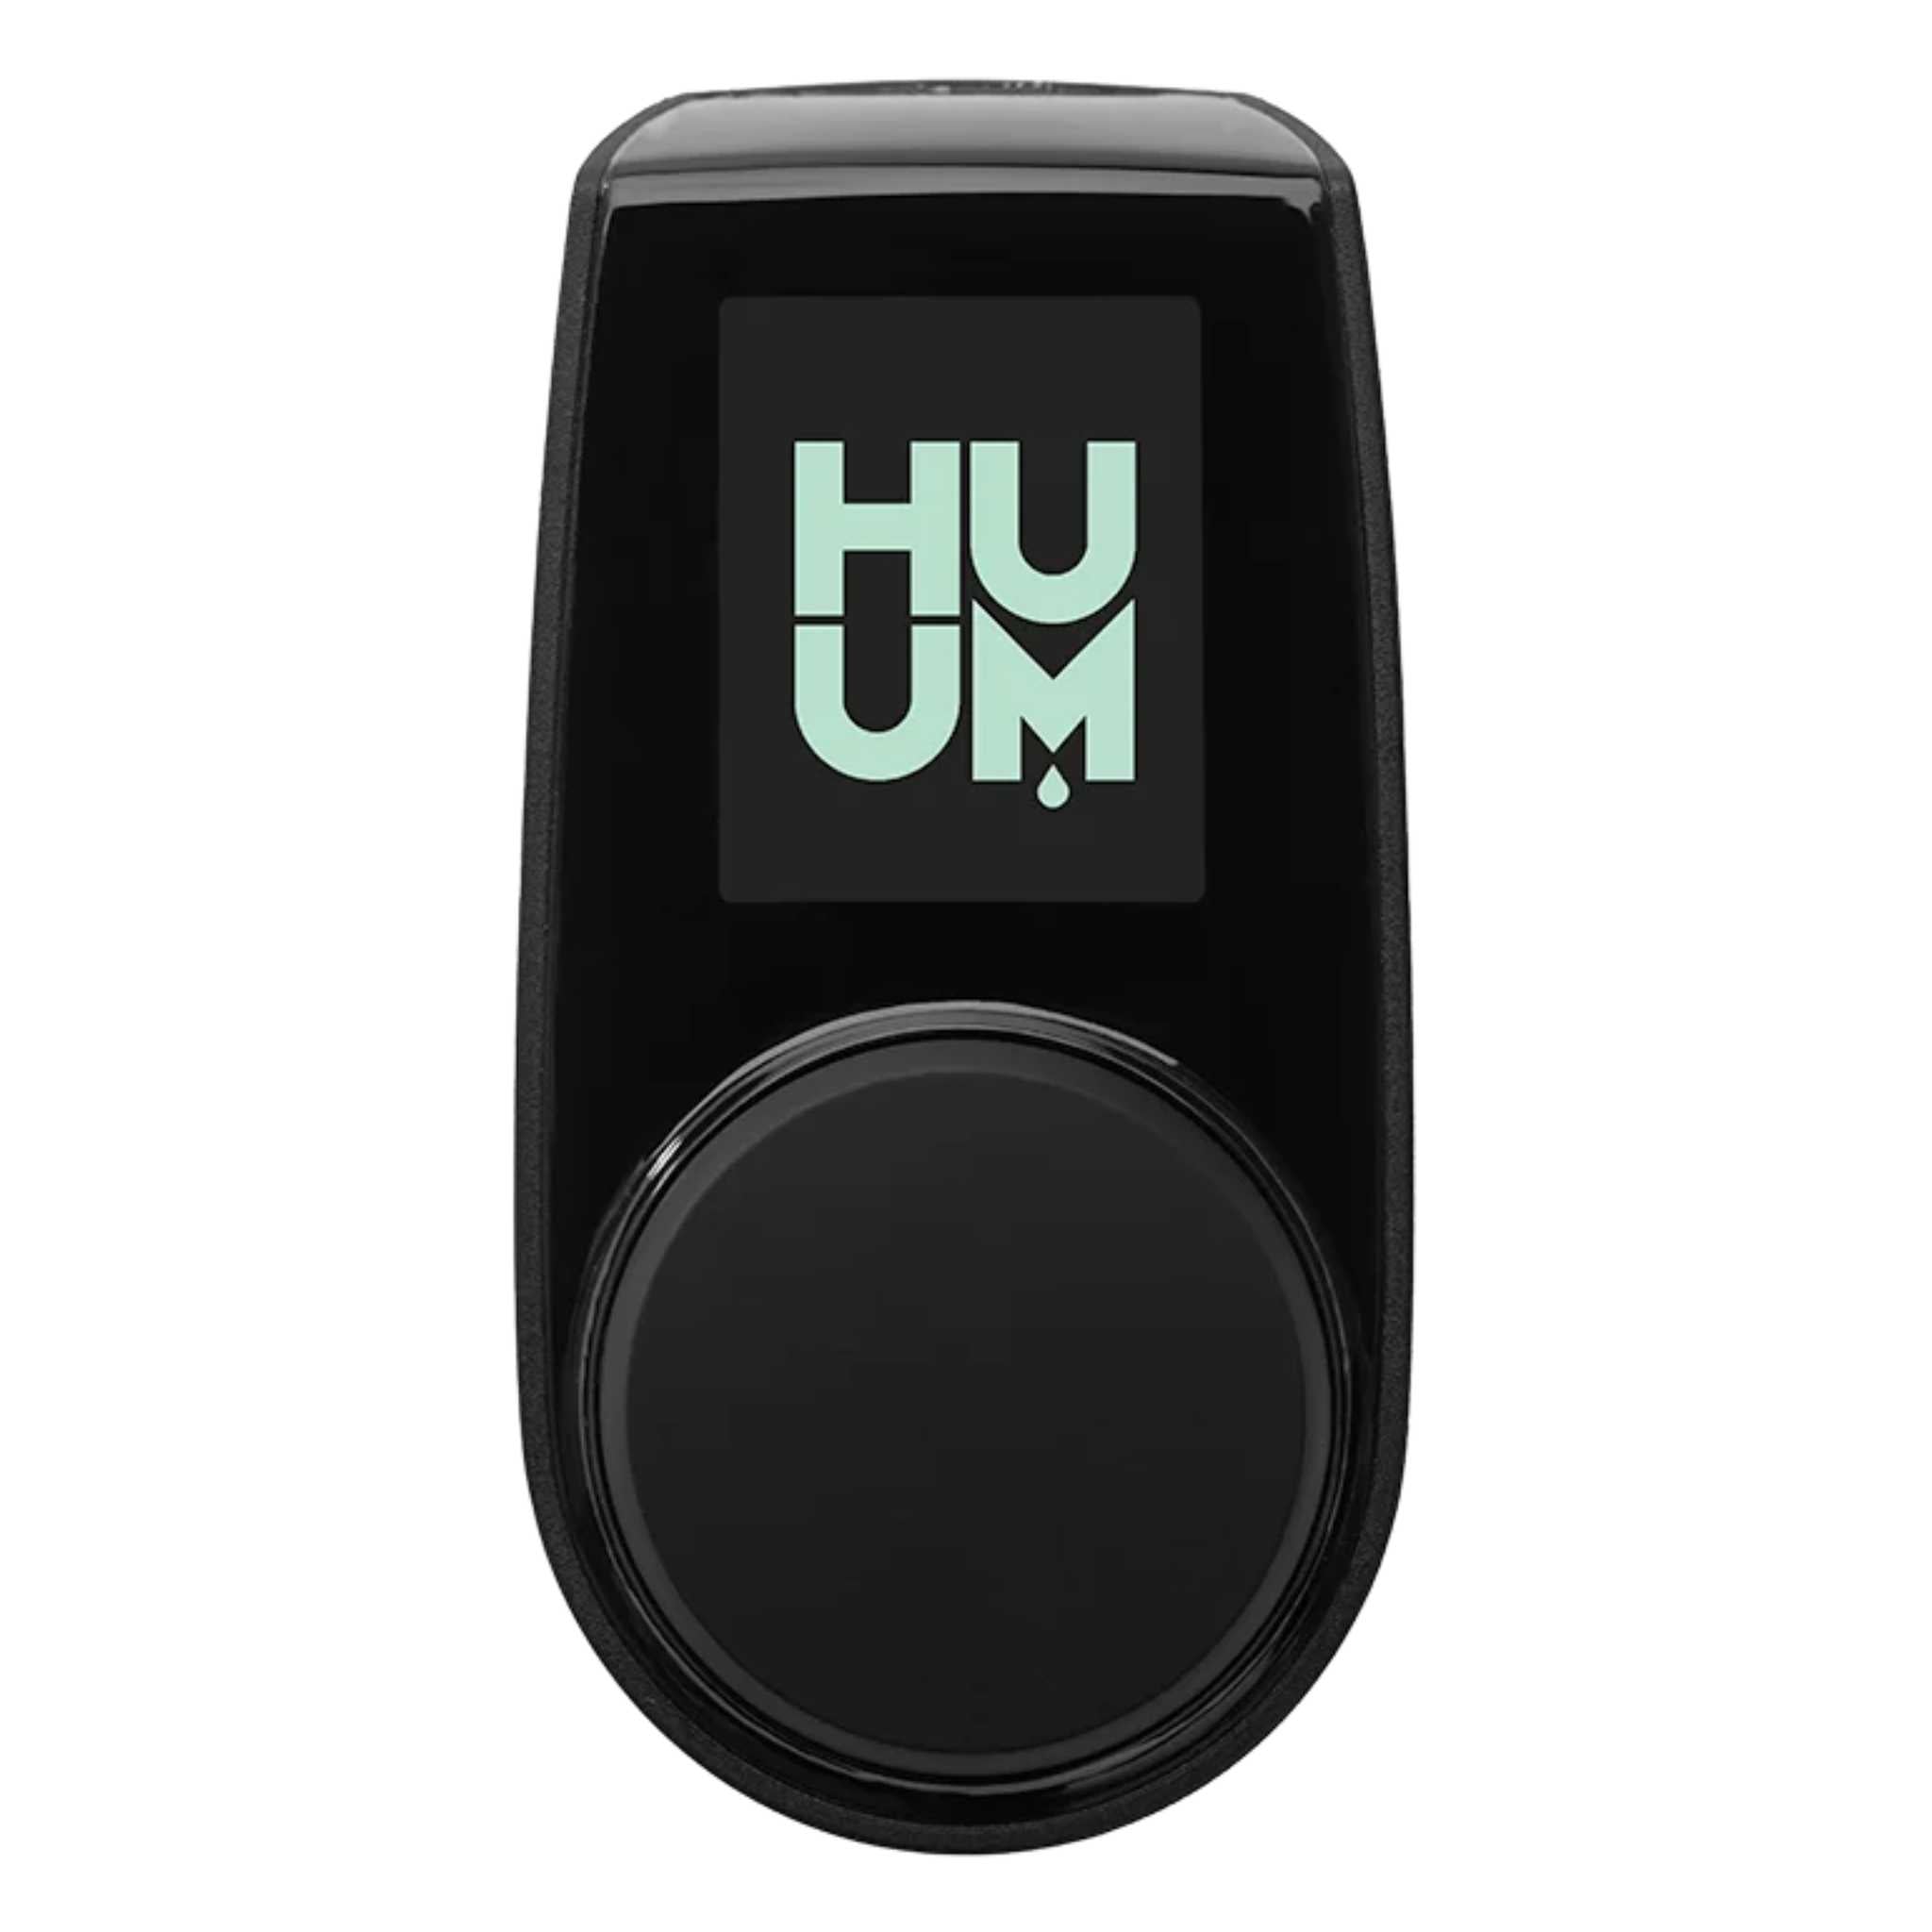 UKU GSM/4G Black Controller by HUUM | Finnmark Sauna